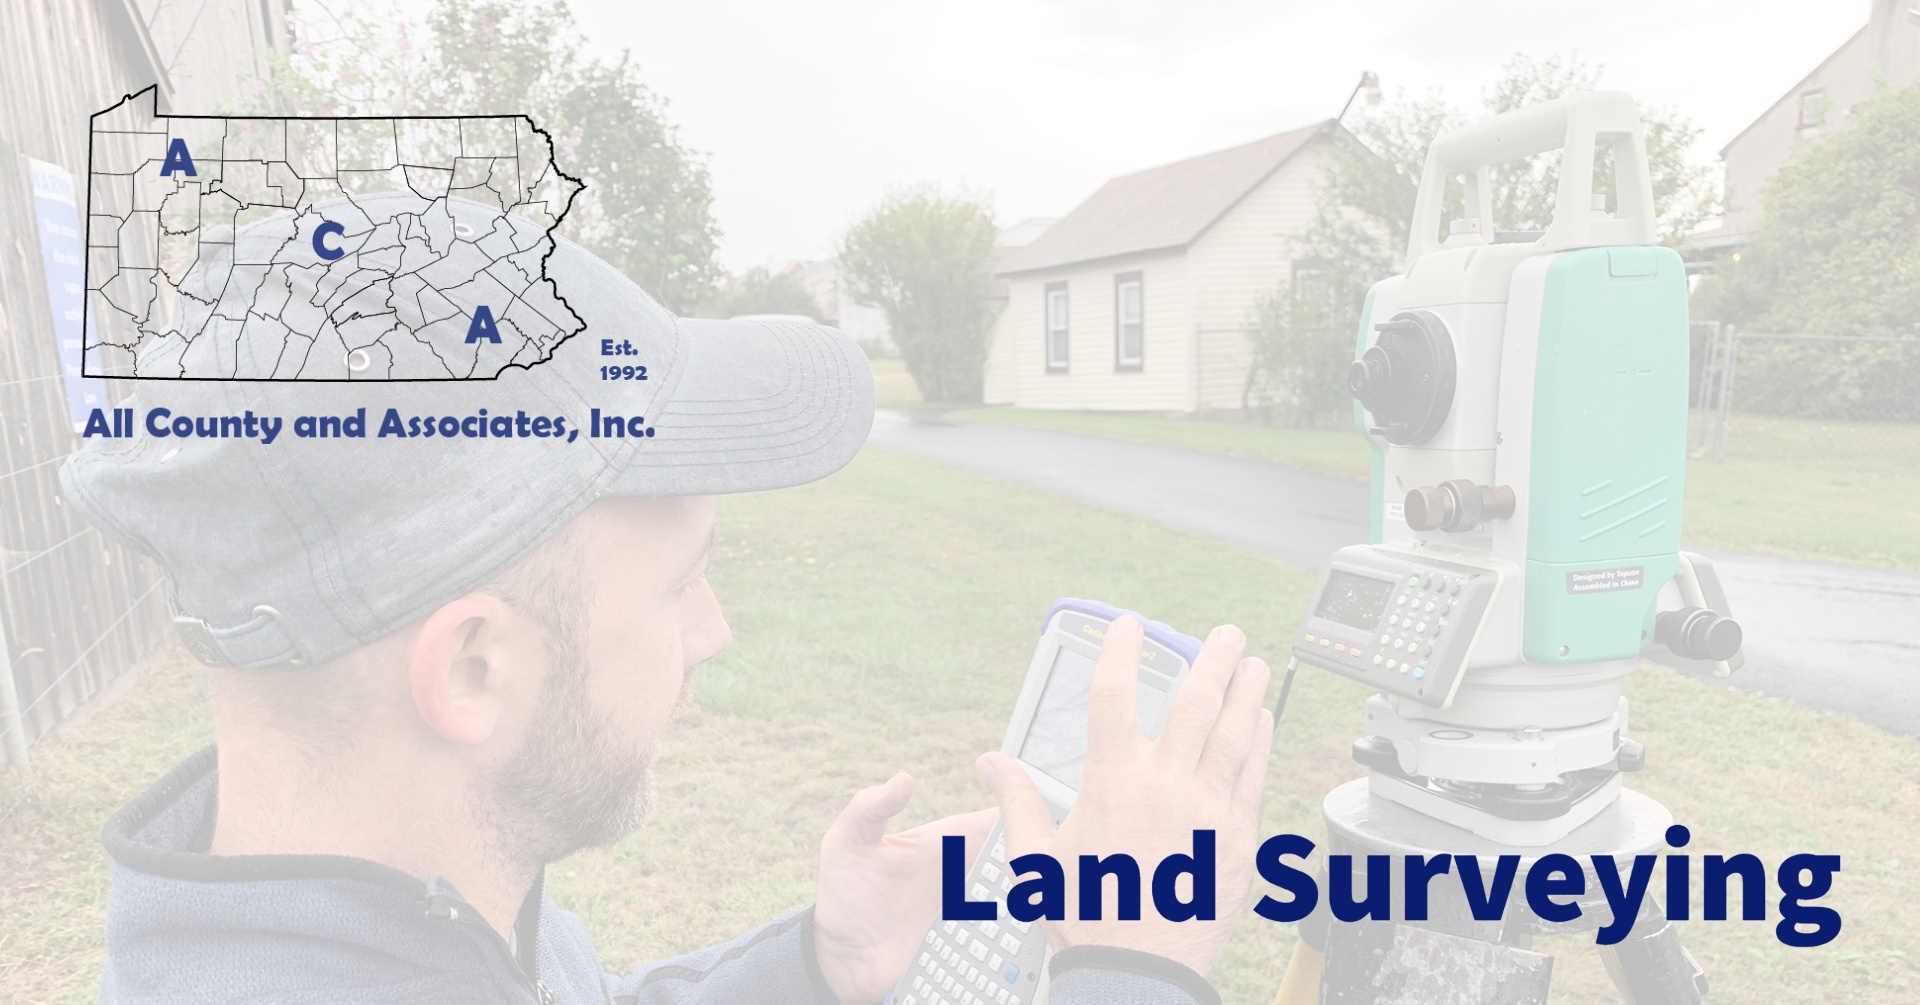 Land surveyor using equipment